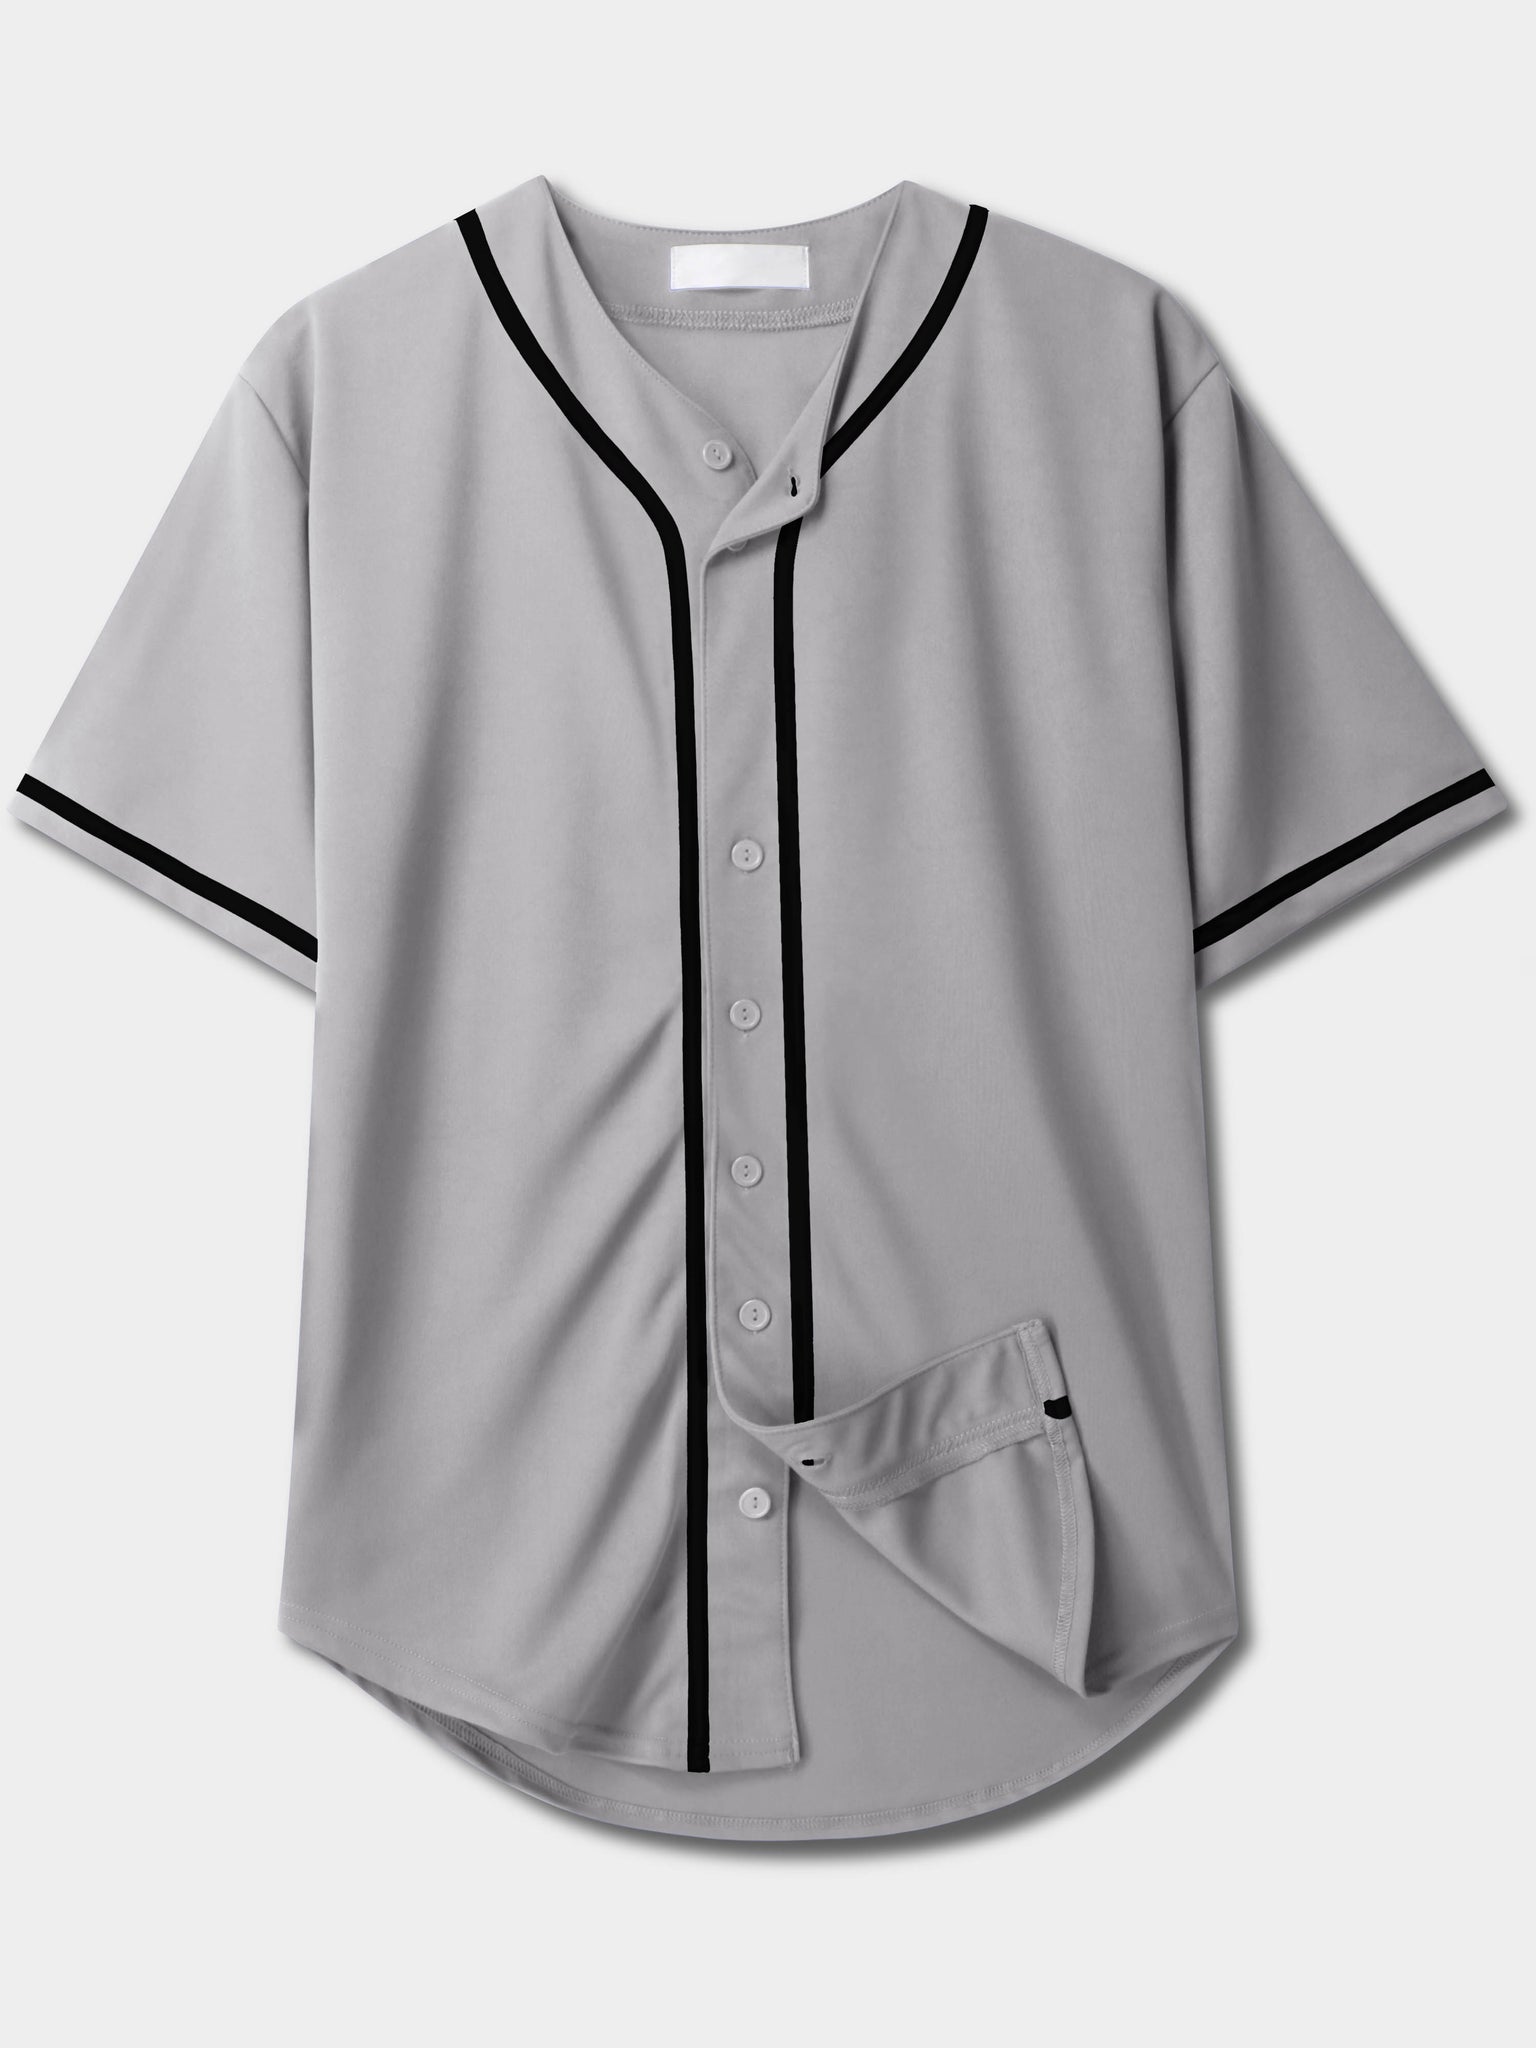 Mens Team Sports Printable Blank Baseball Jersey Collar Button Up Shirts -  Men > T-Shirts & Tank Tops > Baseball Jersey